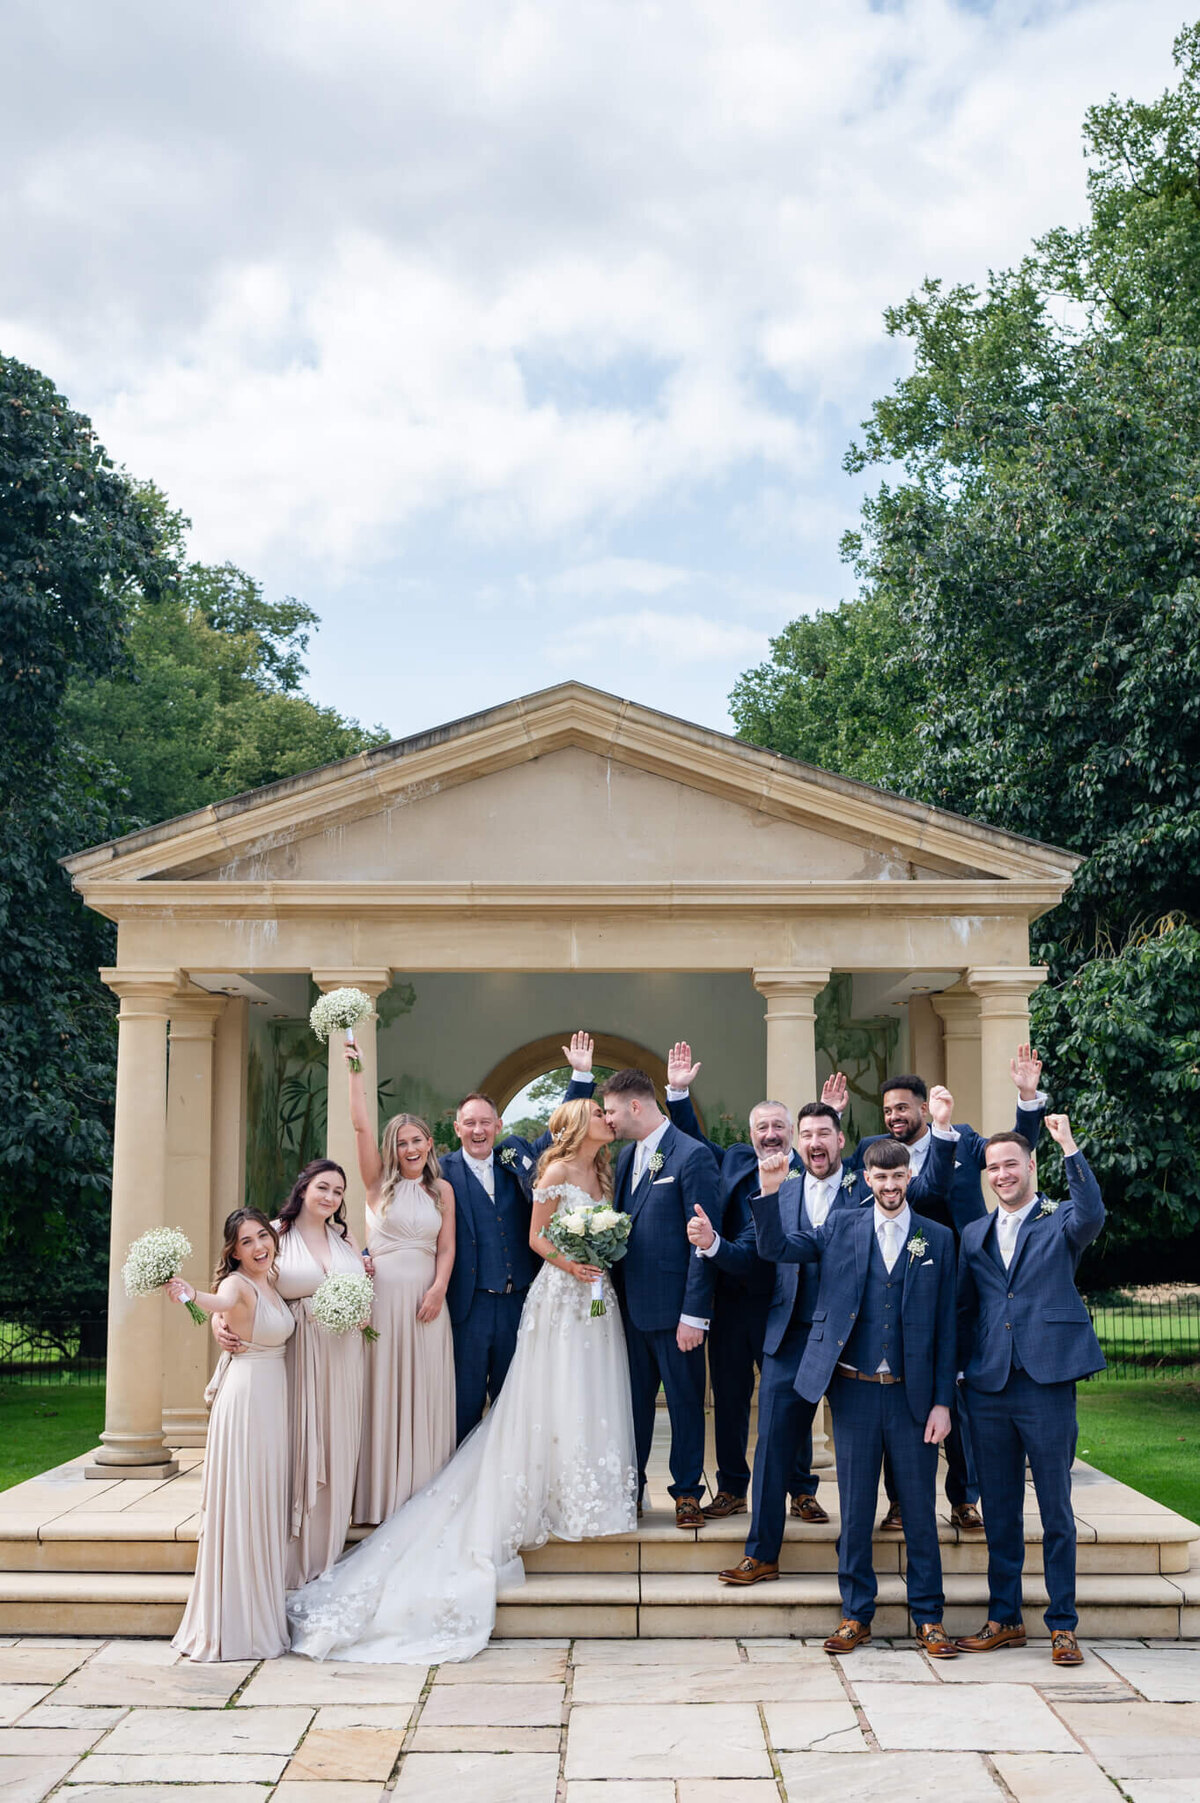 Rowton Castle Wedding Photographer - Shropshire UK Wedding Photographer - Chloe Bolam - E&A - 19.08.23 227